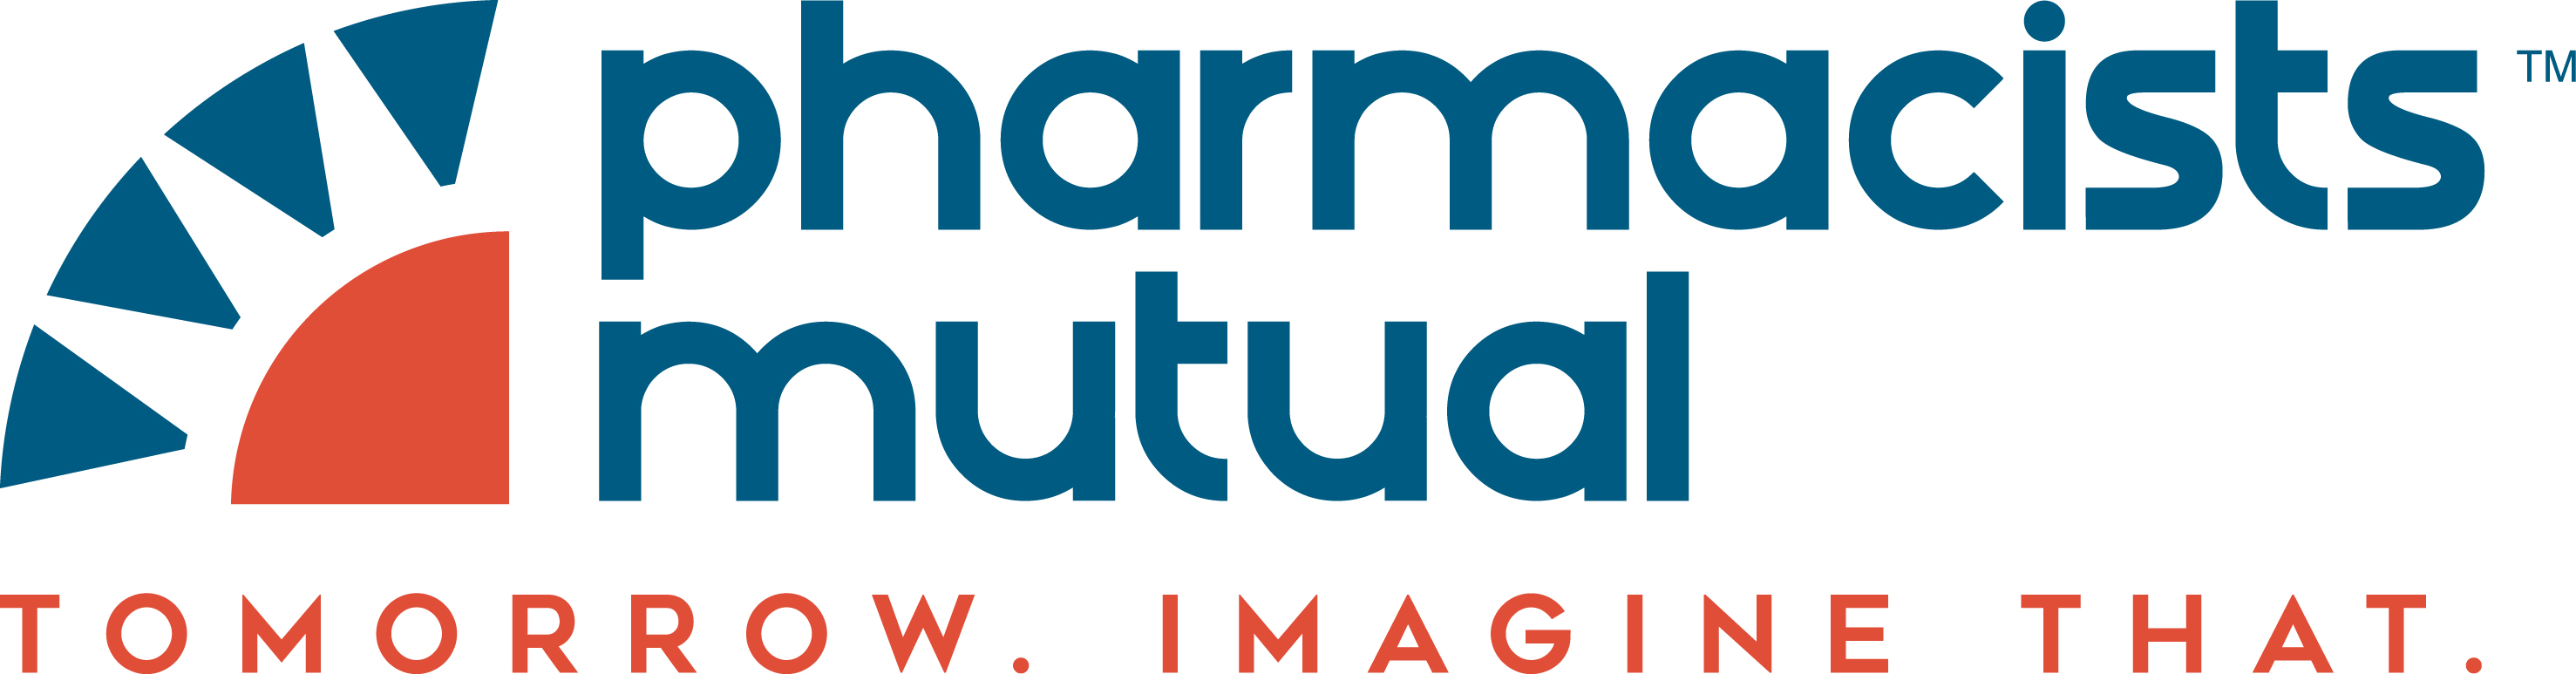 Pharmacists Mutual Insurance Group logo